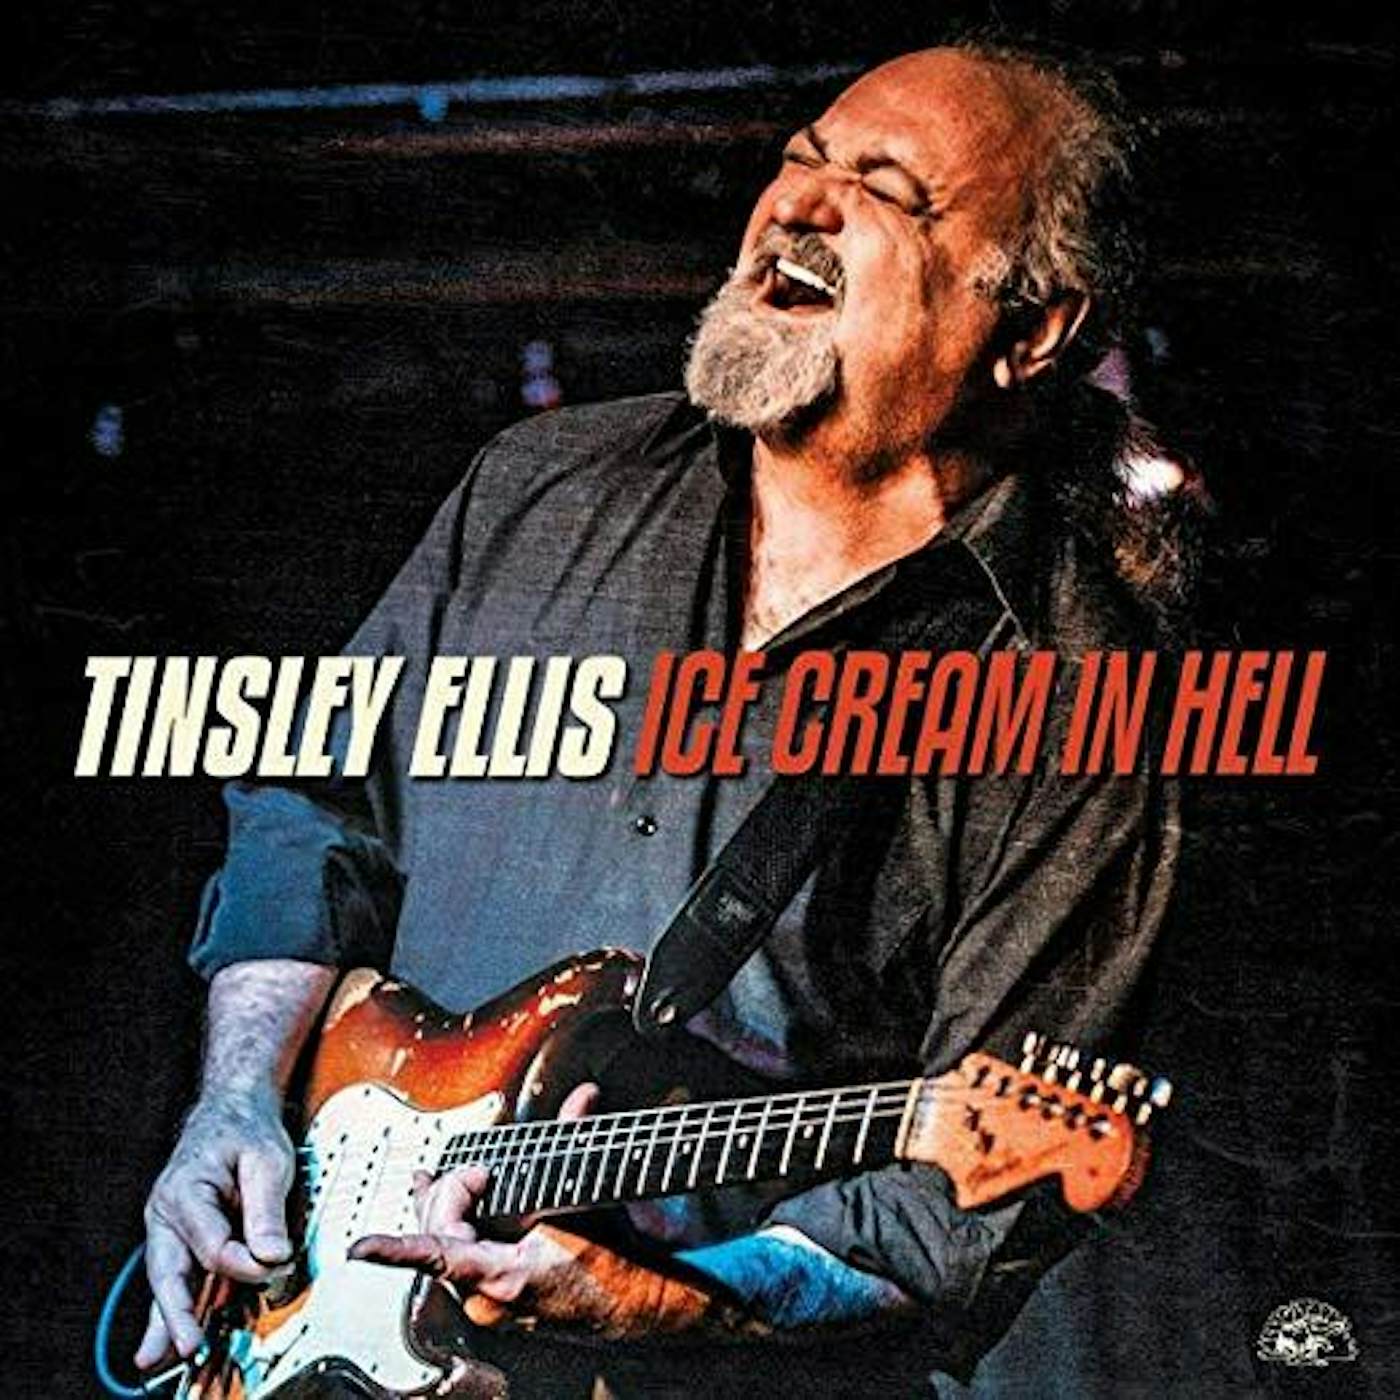 Tinsley Ellis ICE CREAM IN HELL CD